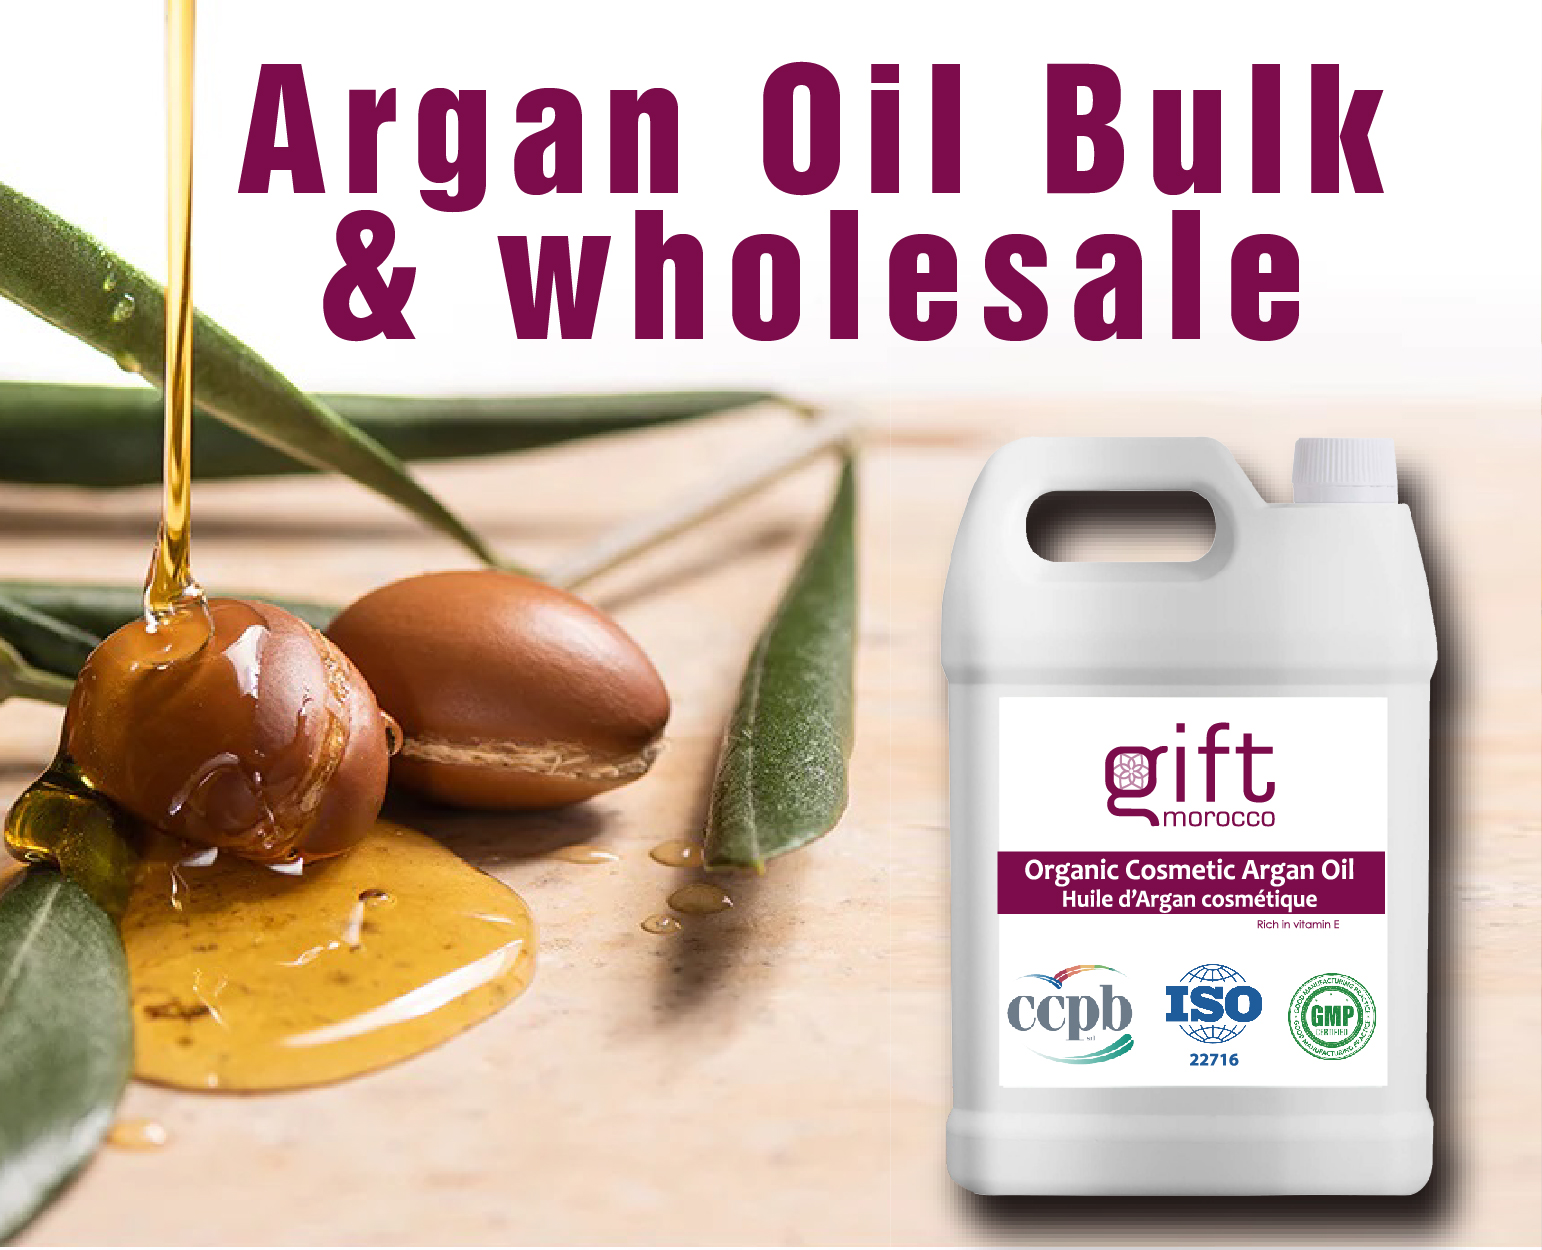 Bulk organic argan oil gift morocco